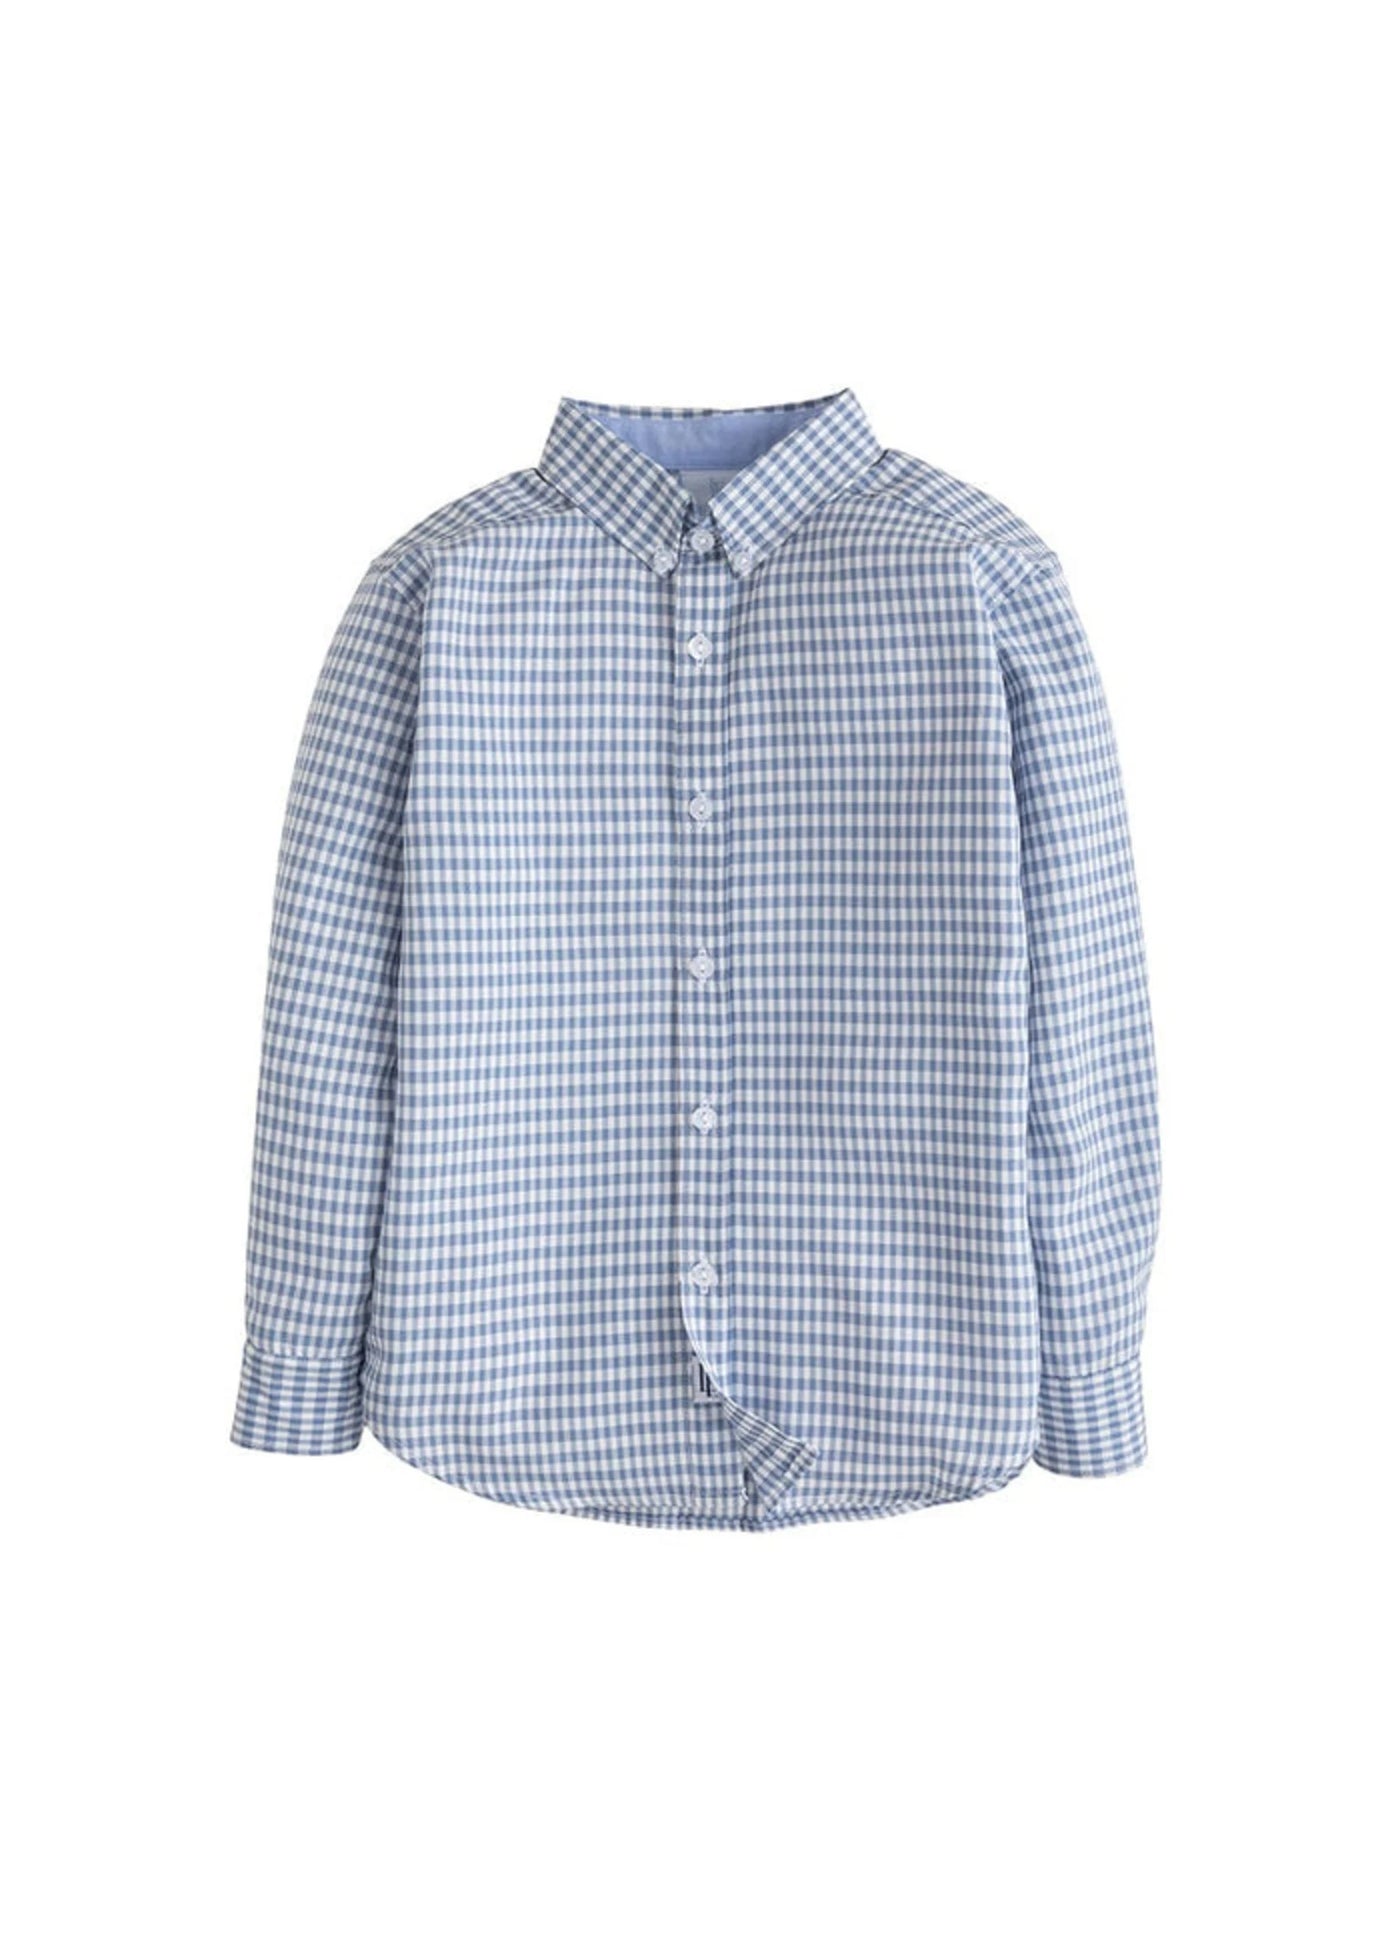 Button Down Shirt - Gray Blue Gingham - Breckenridge Baby